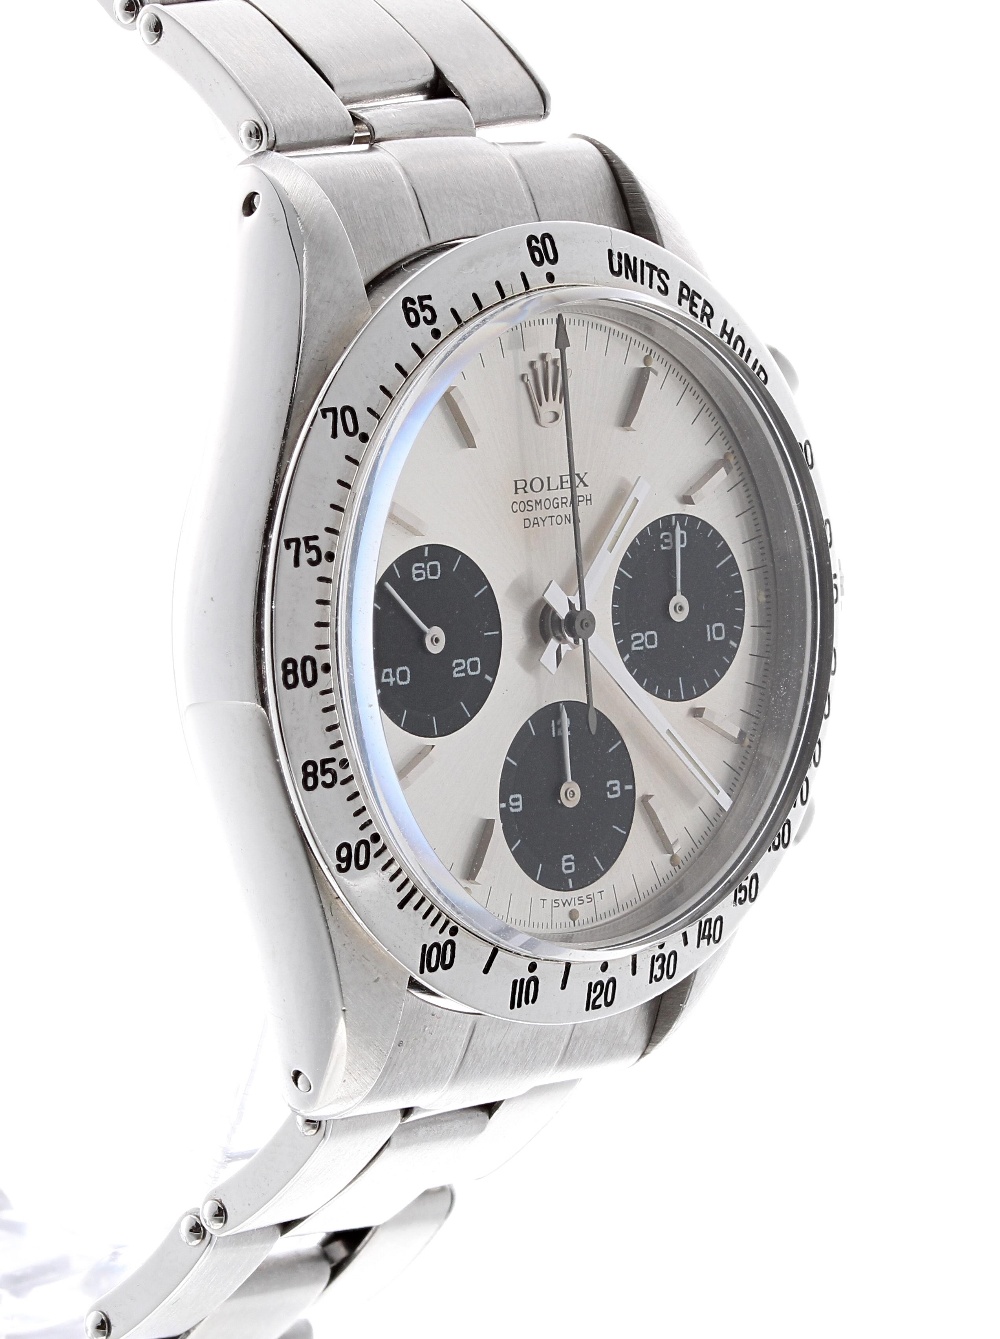 Rare and Fine Rolex Cosmograph Daytona stainless steel gentleman's bracelet watch, ref. 6239, - Image 7 of 10